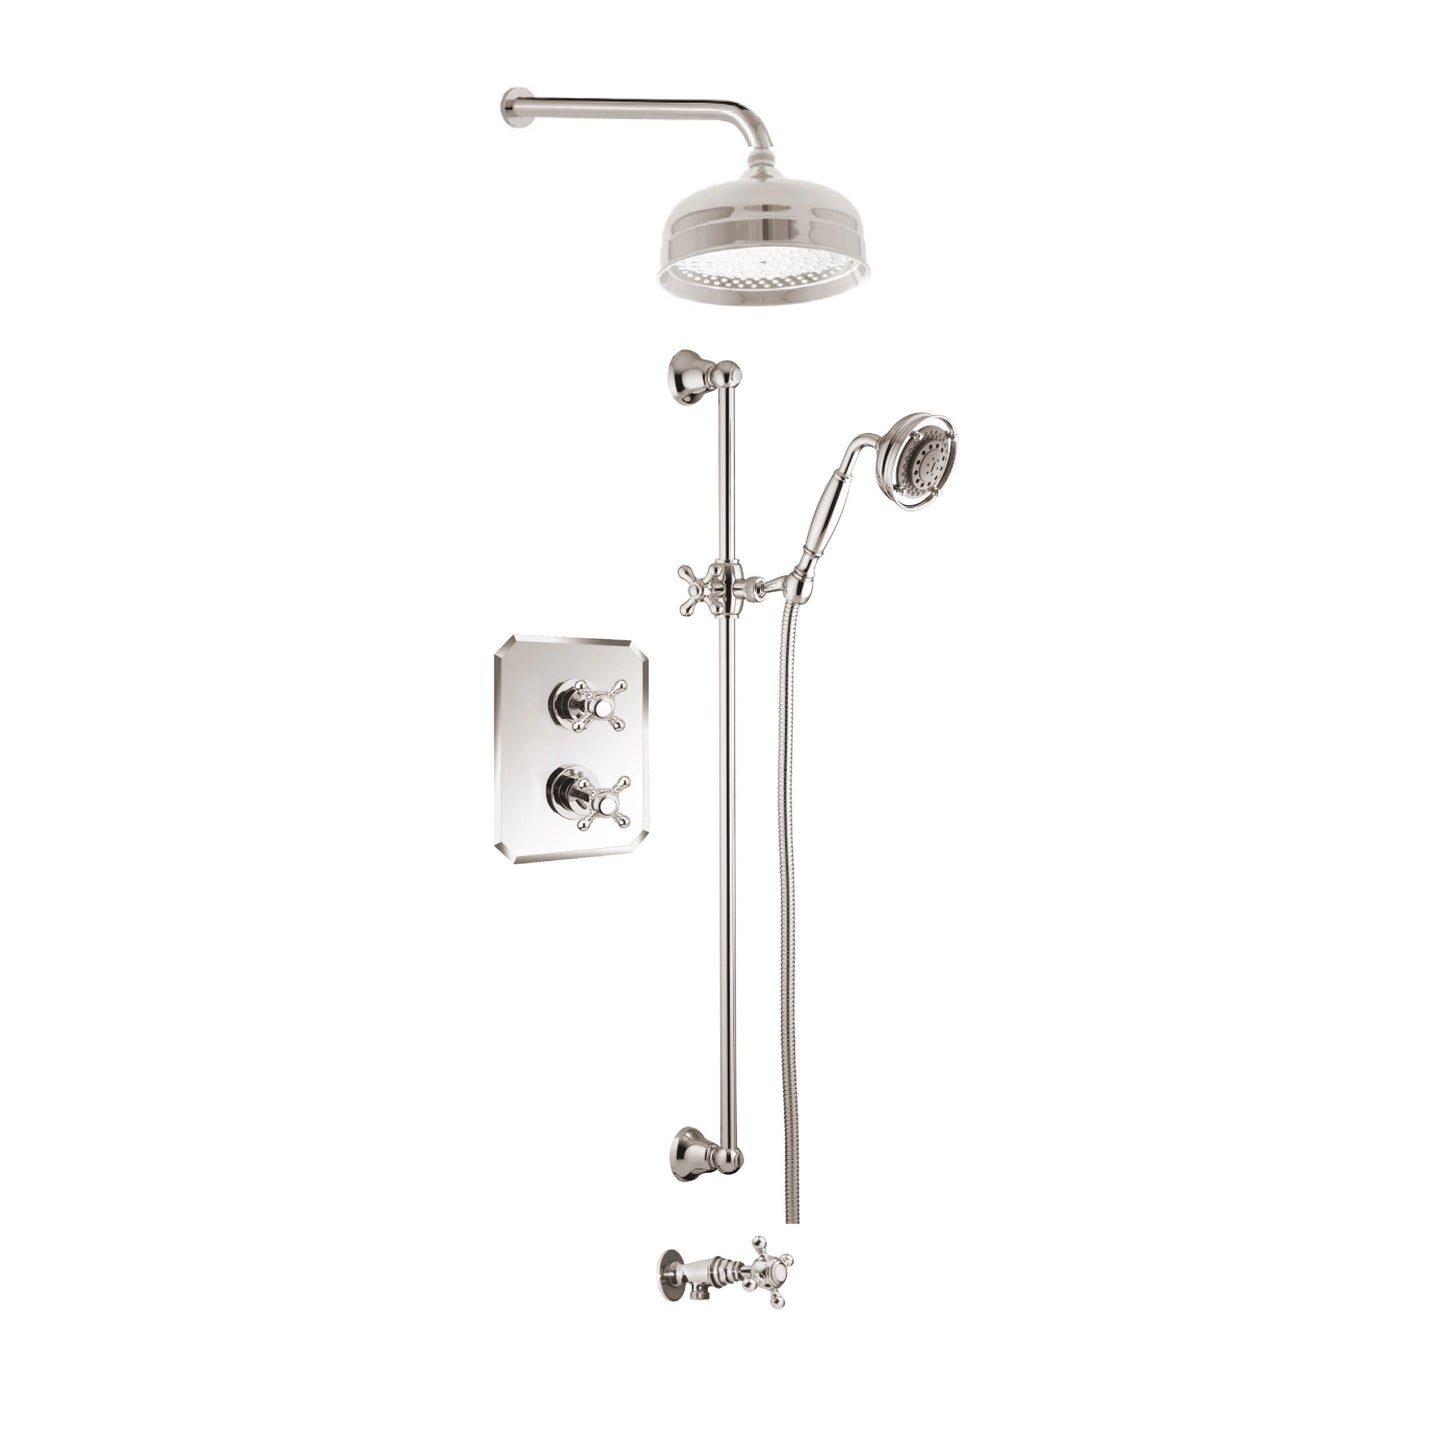 Aquadesign Products Shower Kit (Julia 37JX) - Polished Nickel